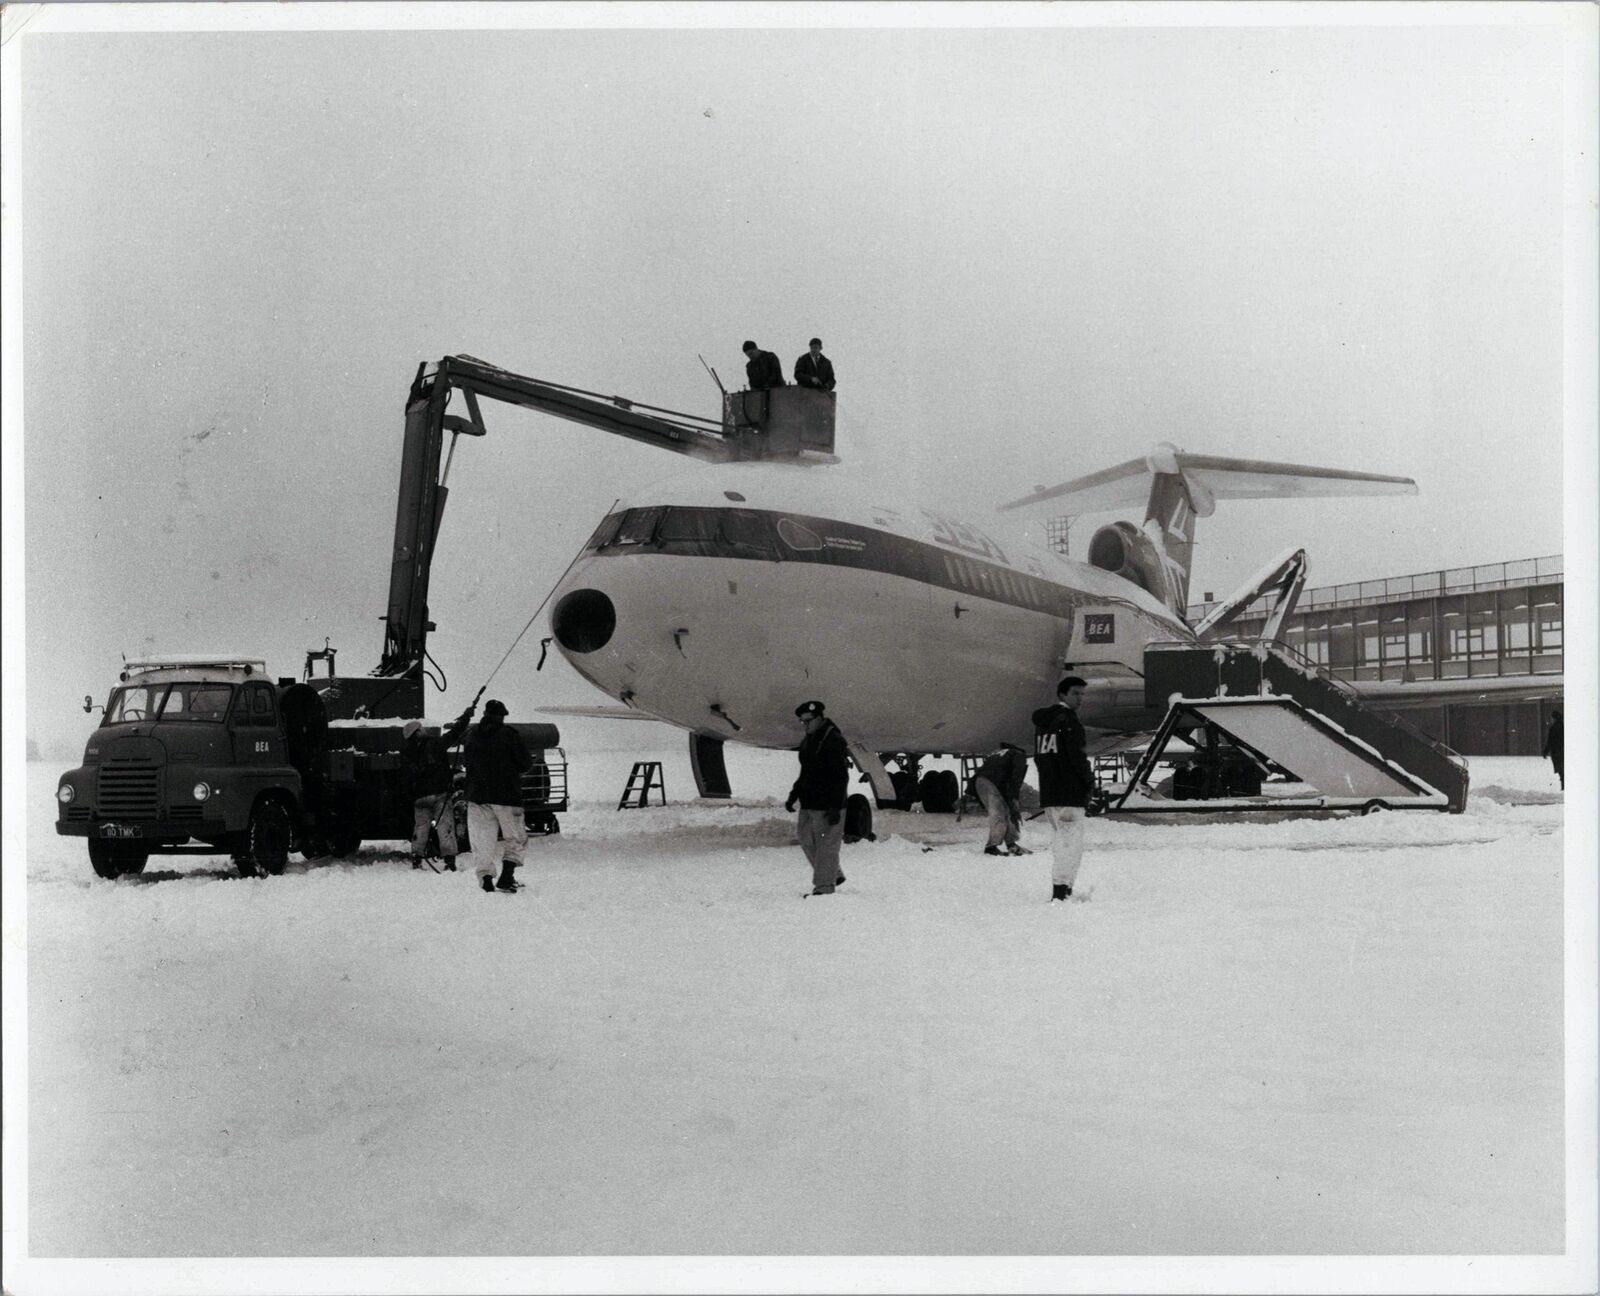 BRITISH EUROPEAN AIRWAYS TRIDENT ONE DE-ICING MANCHESTER AIRPORT 1969 BEA PHOTO